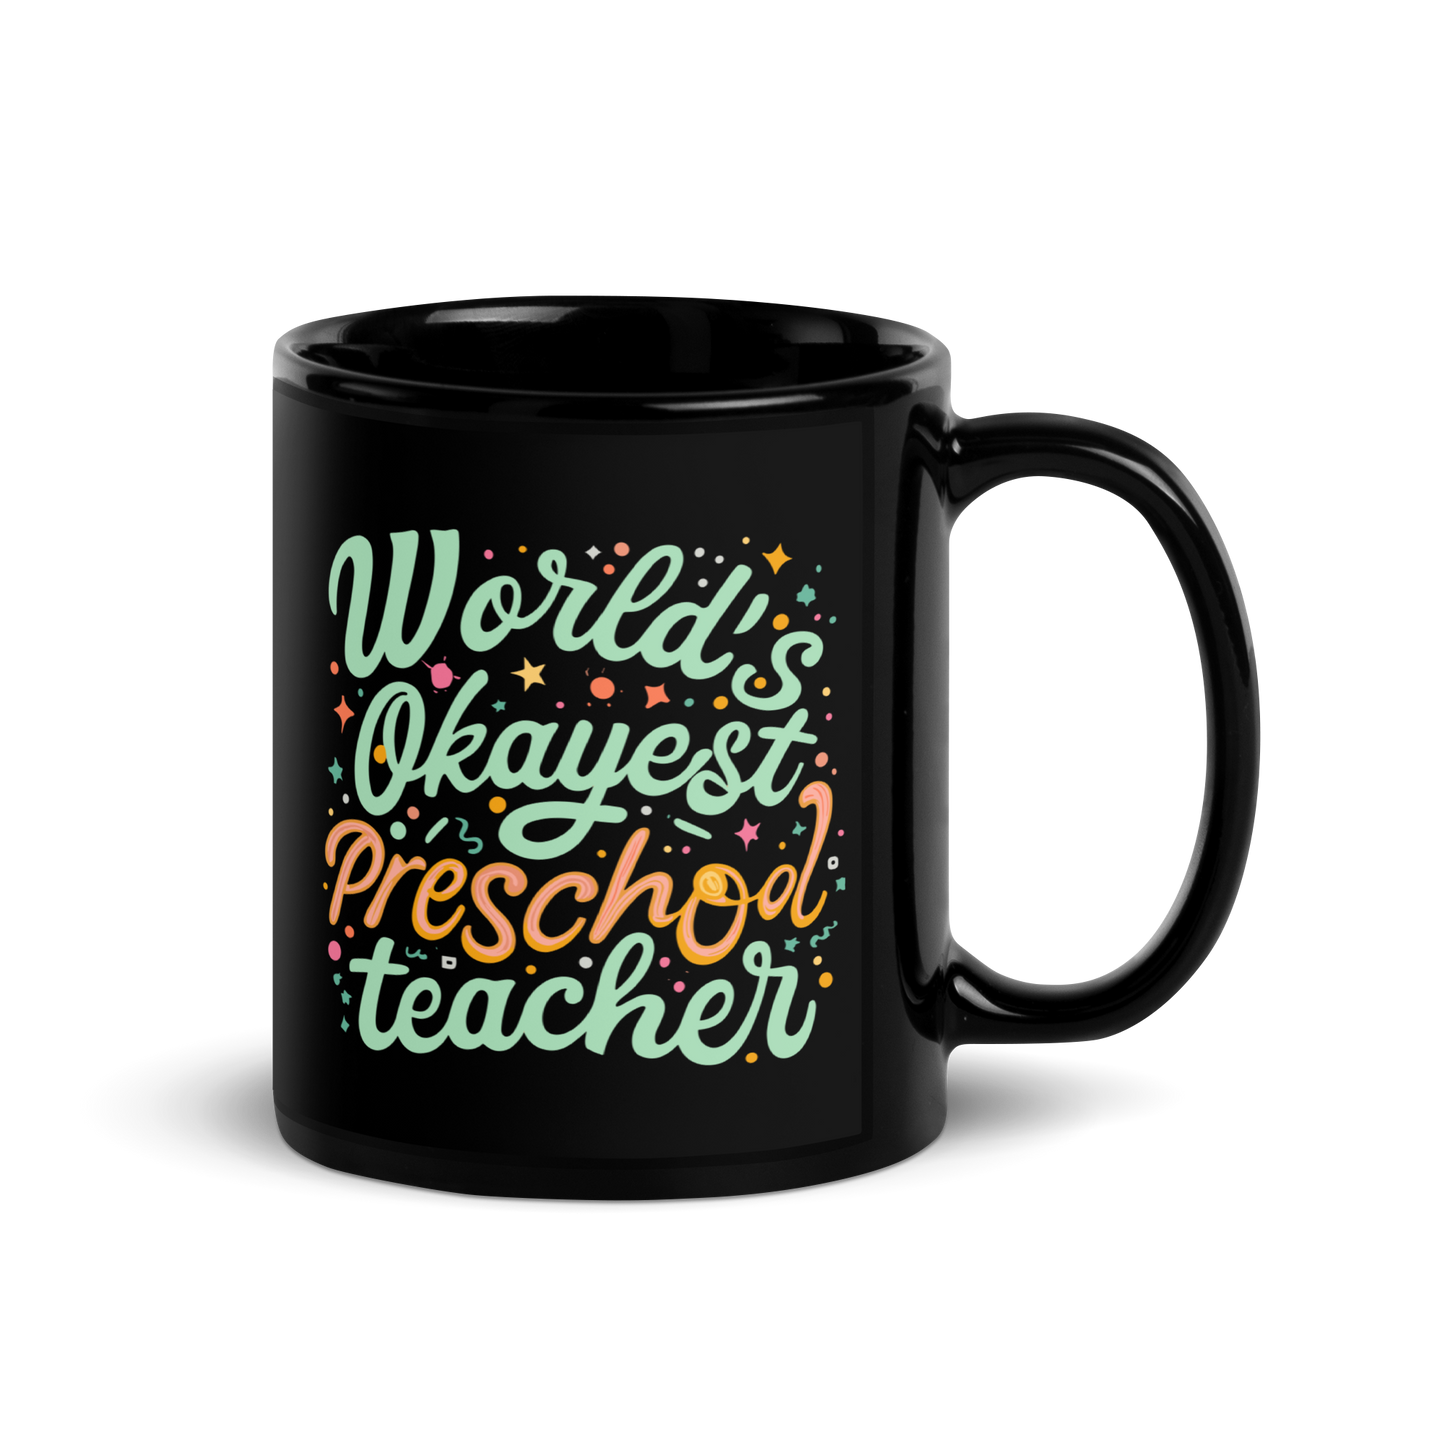 PreK Teacher Coffee Mug - "World's Okayest Preschool Teacher"